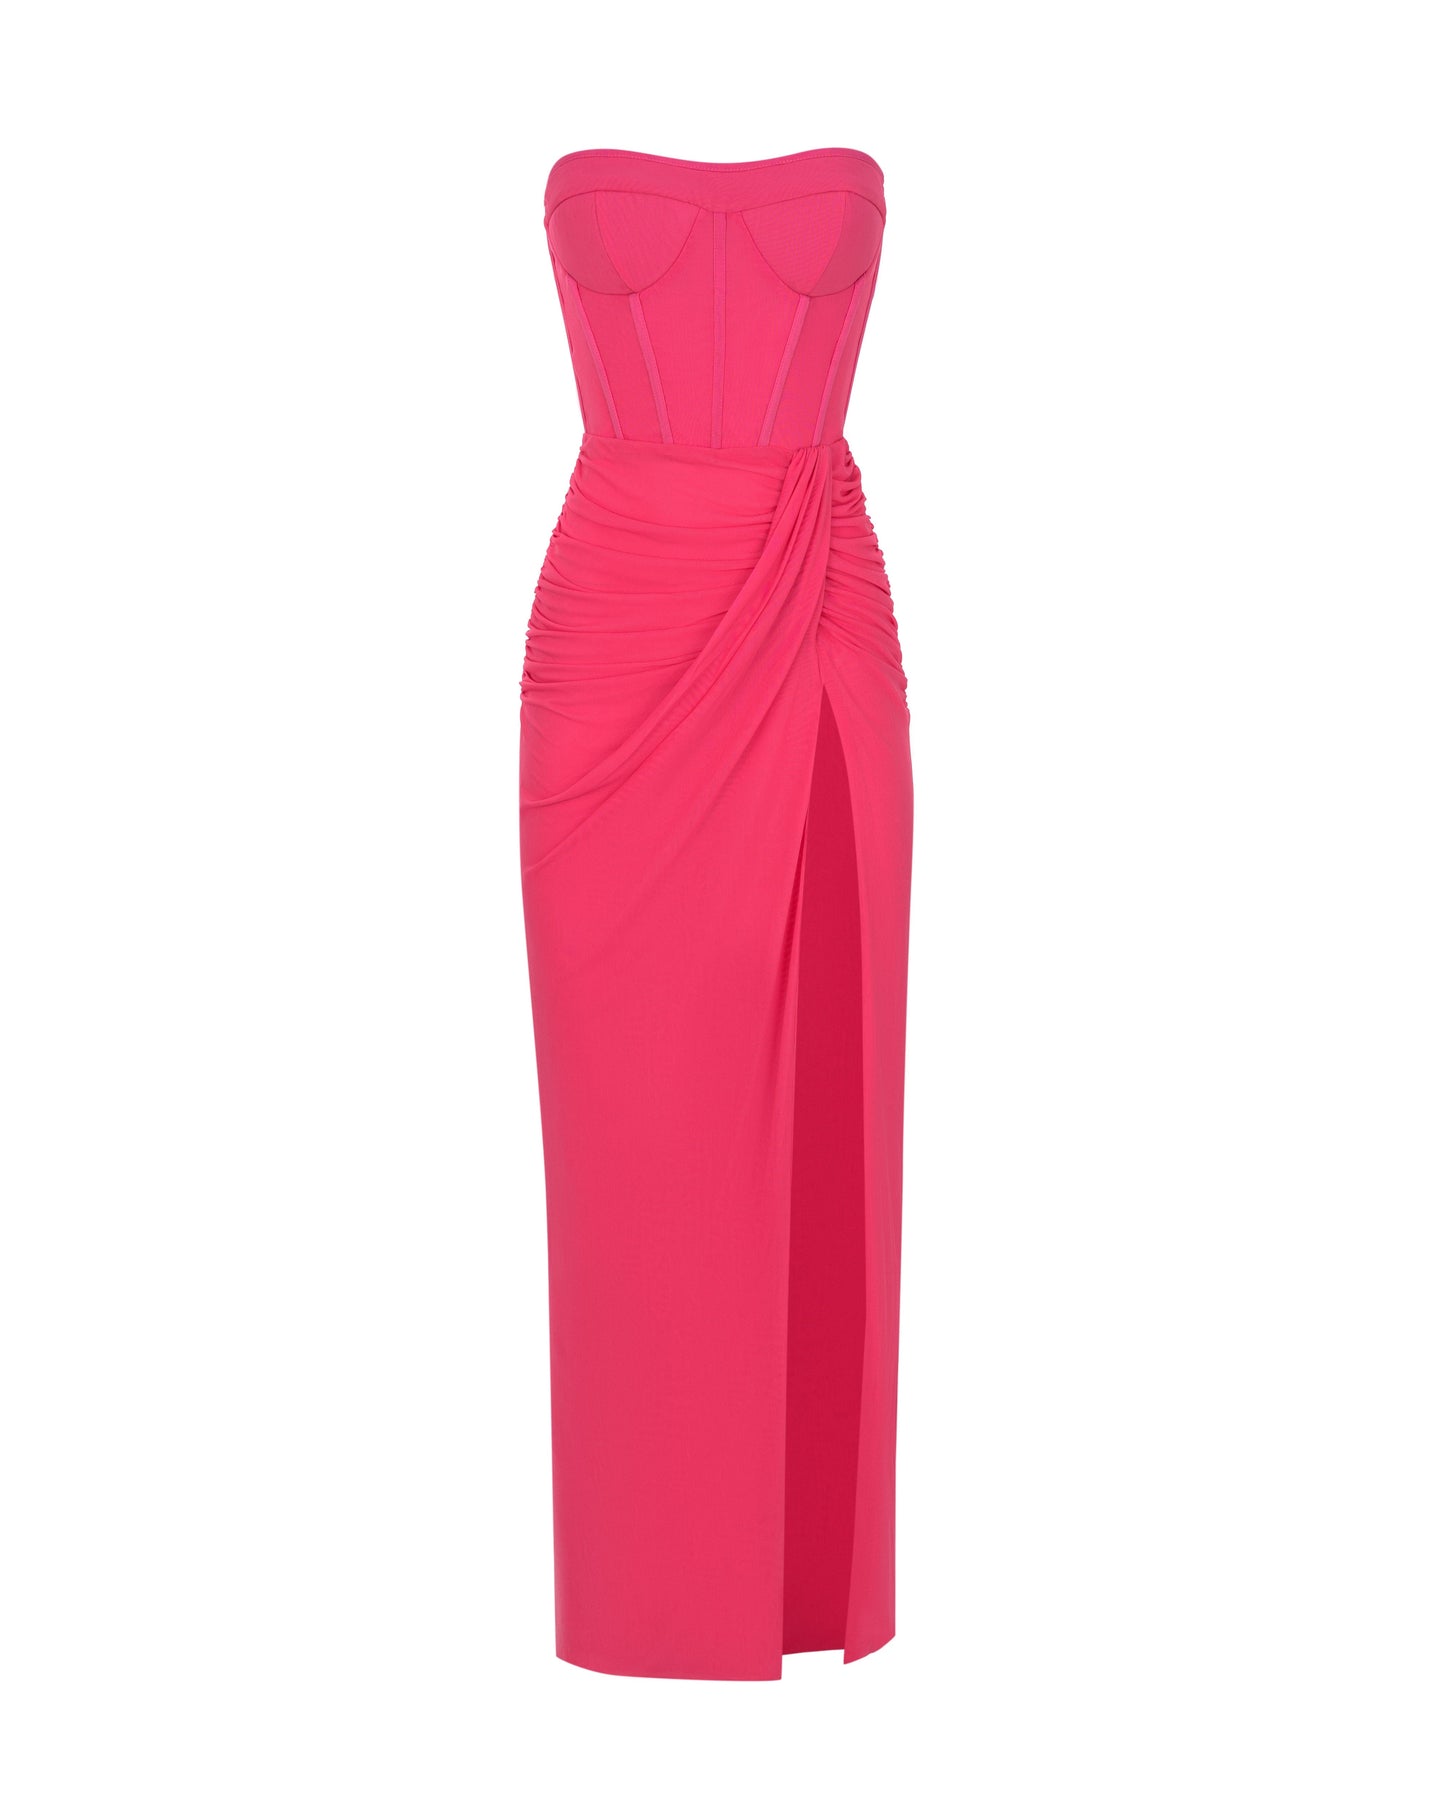 Striking pink off-the-shoulder maxi dress Milla Dresses - USA ...